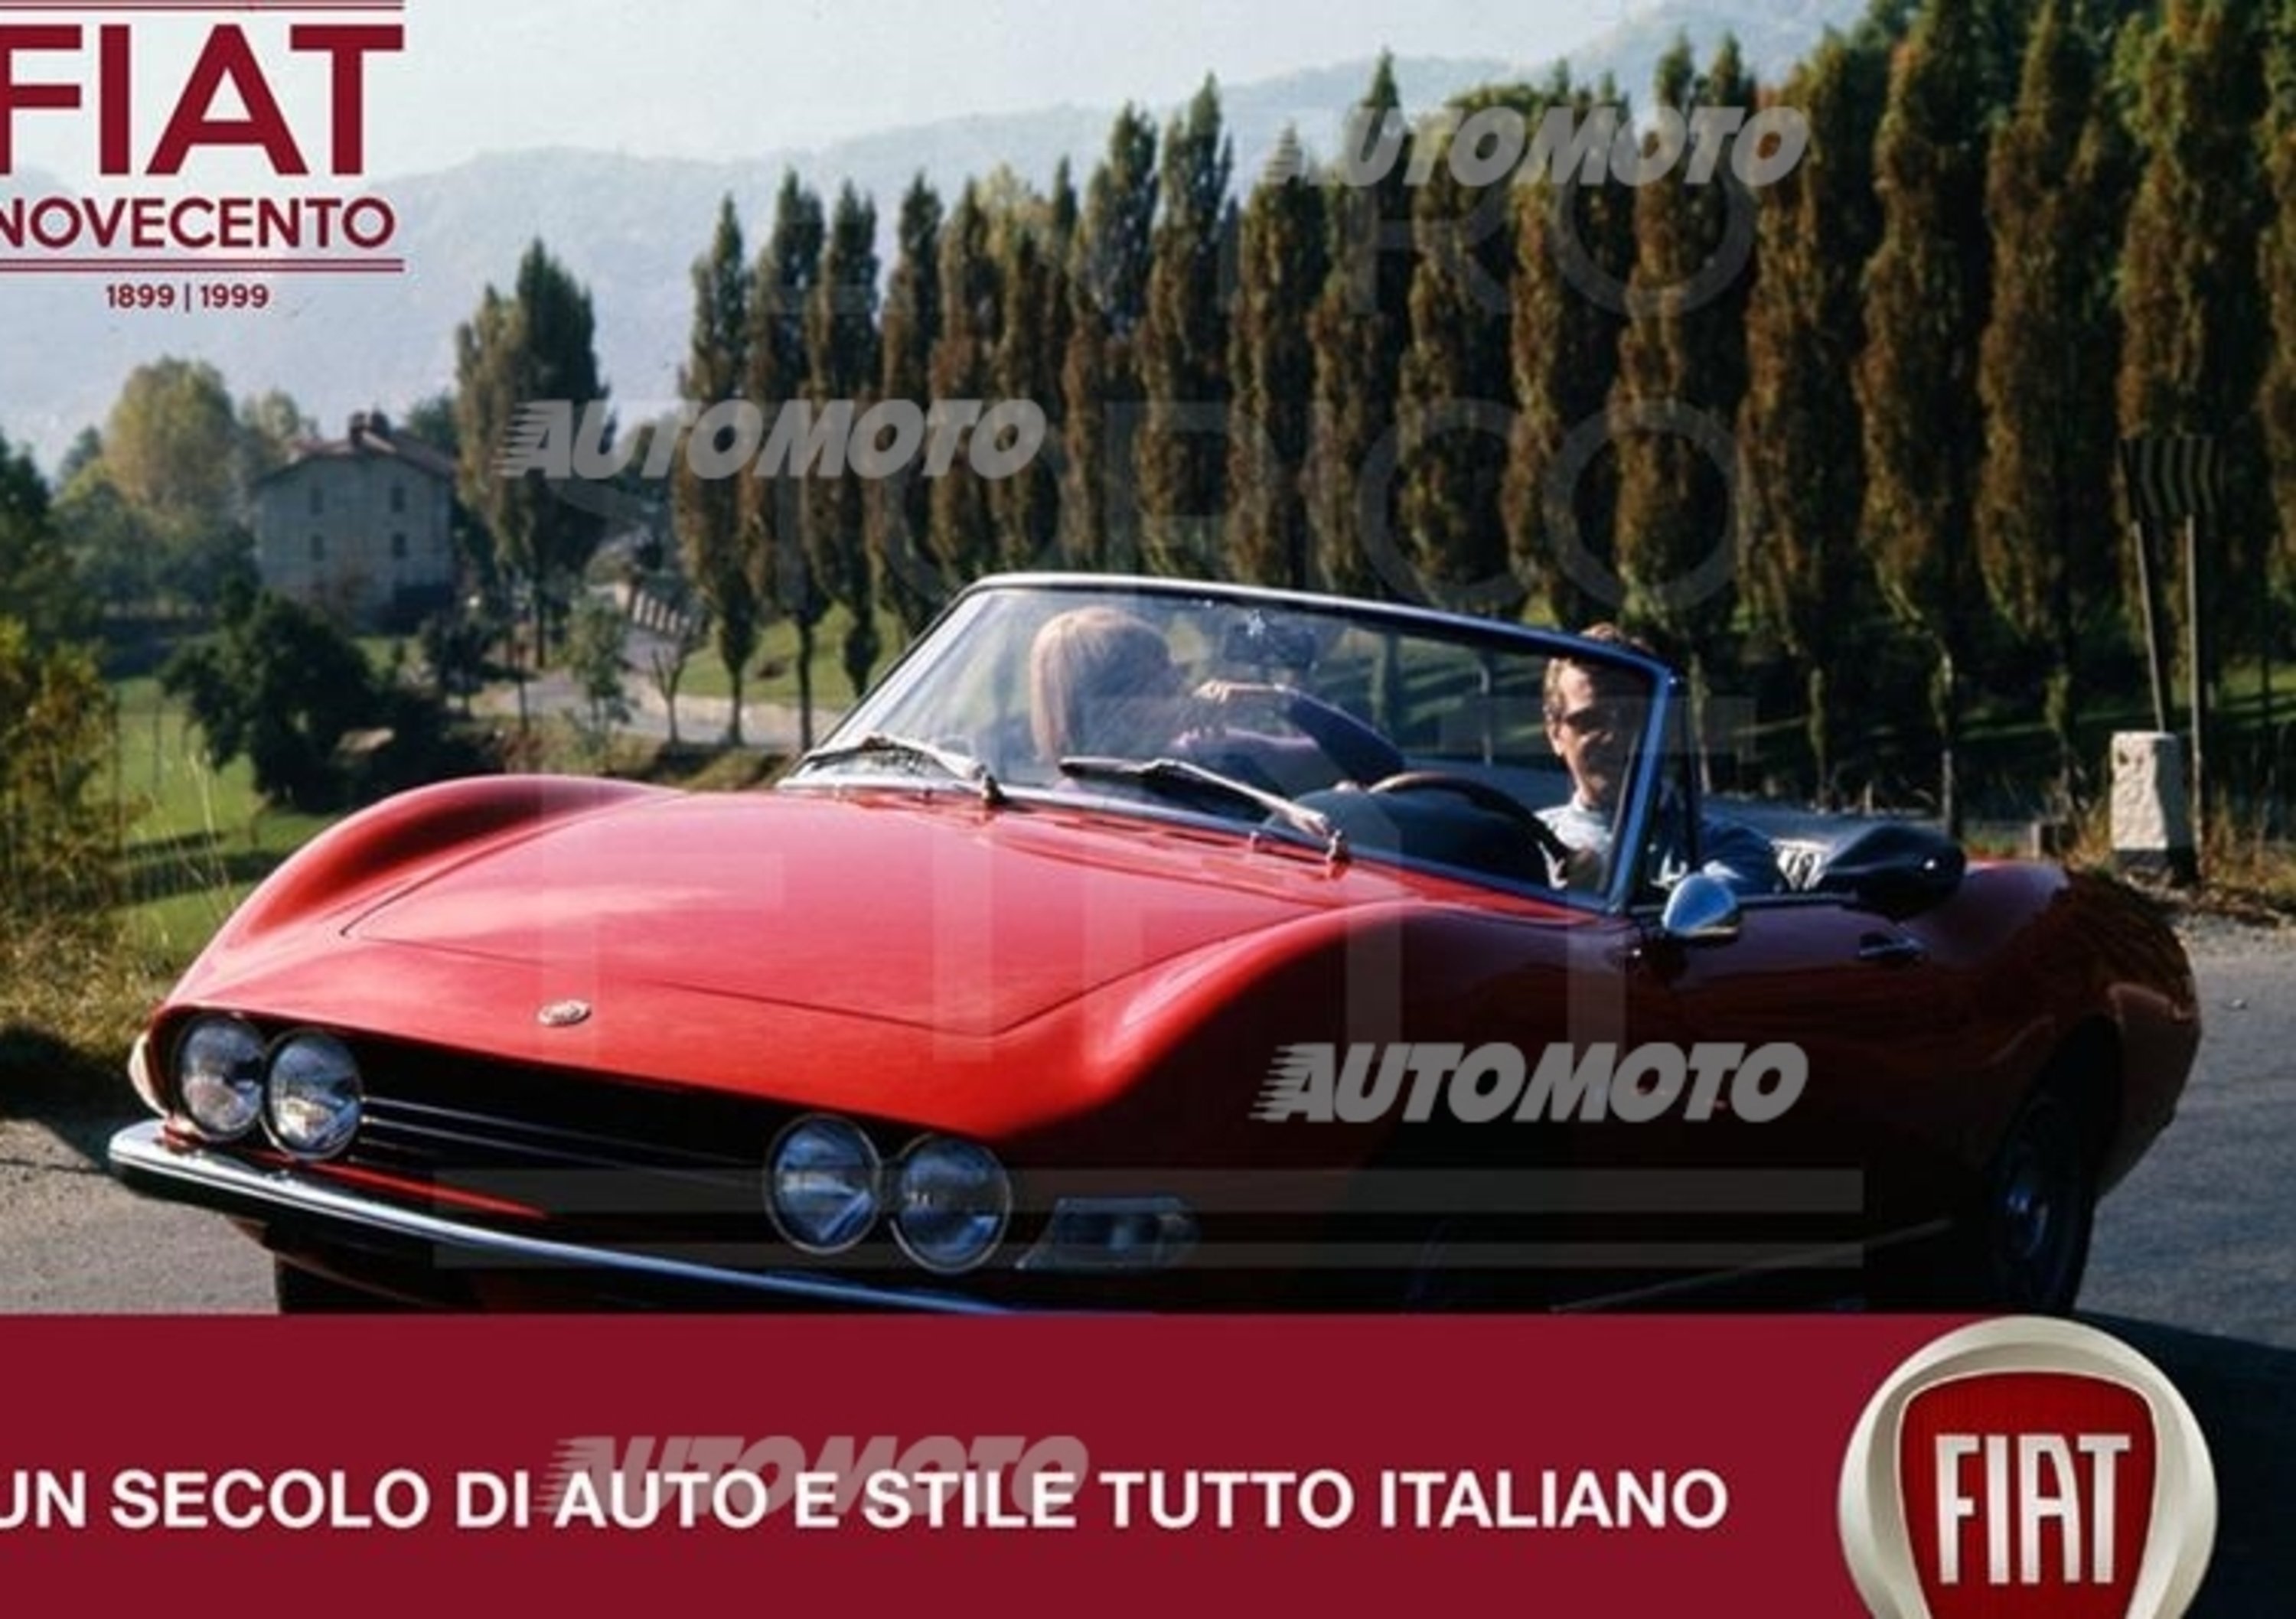 Fiat Novecento